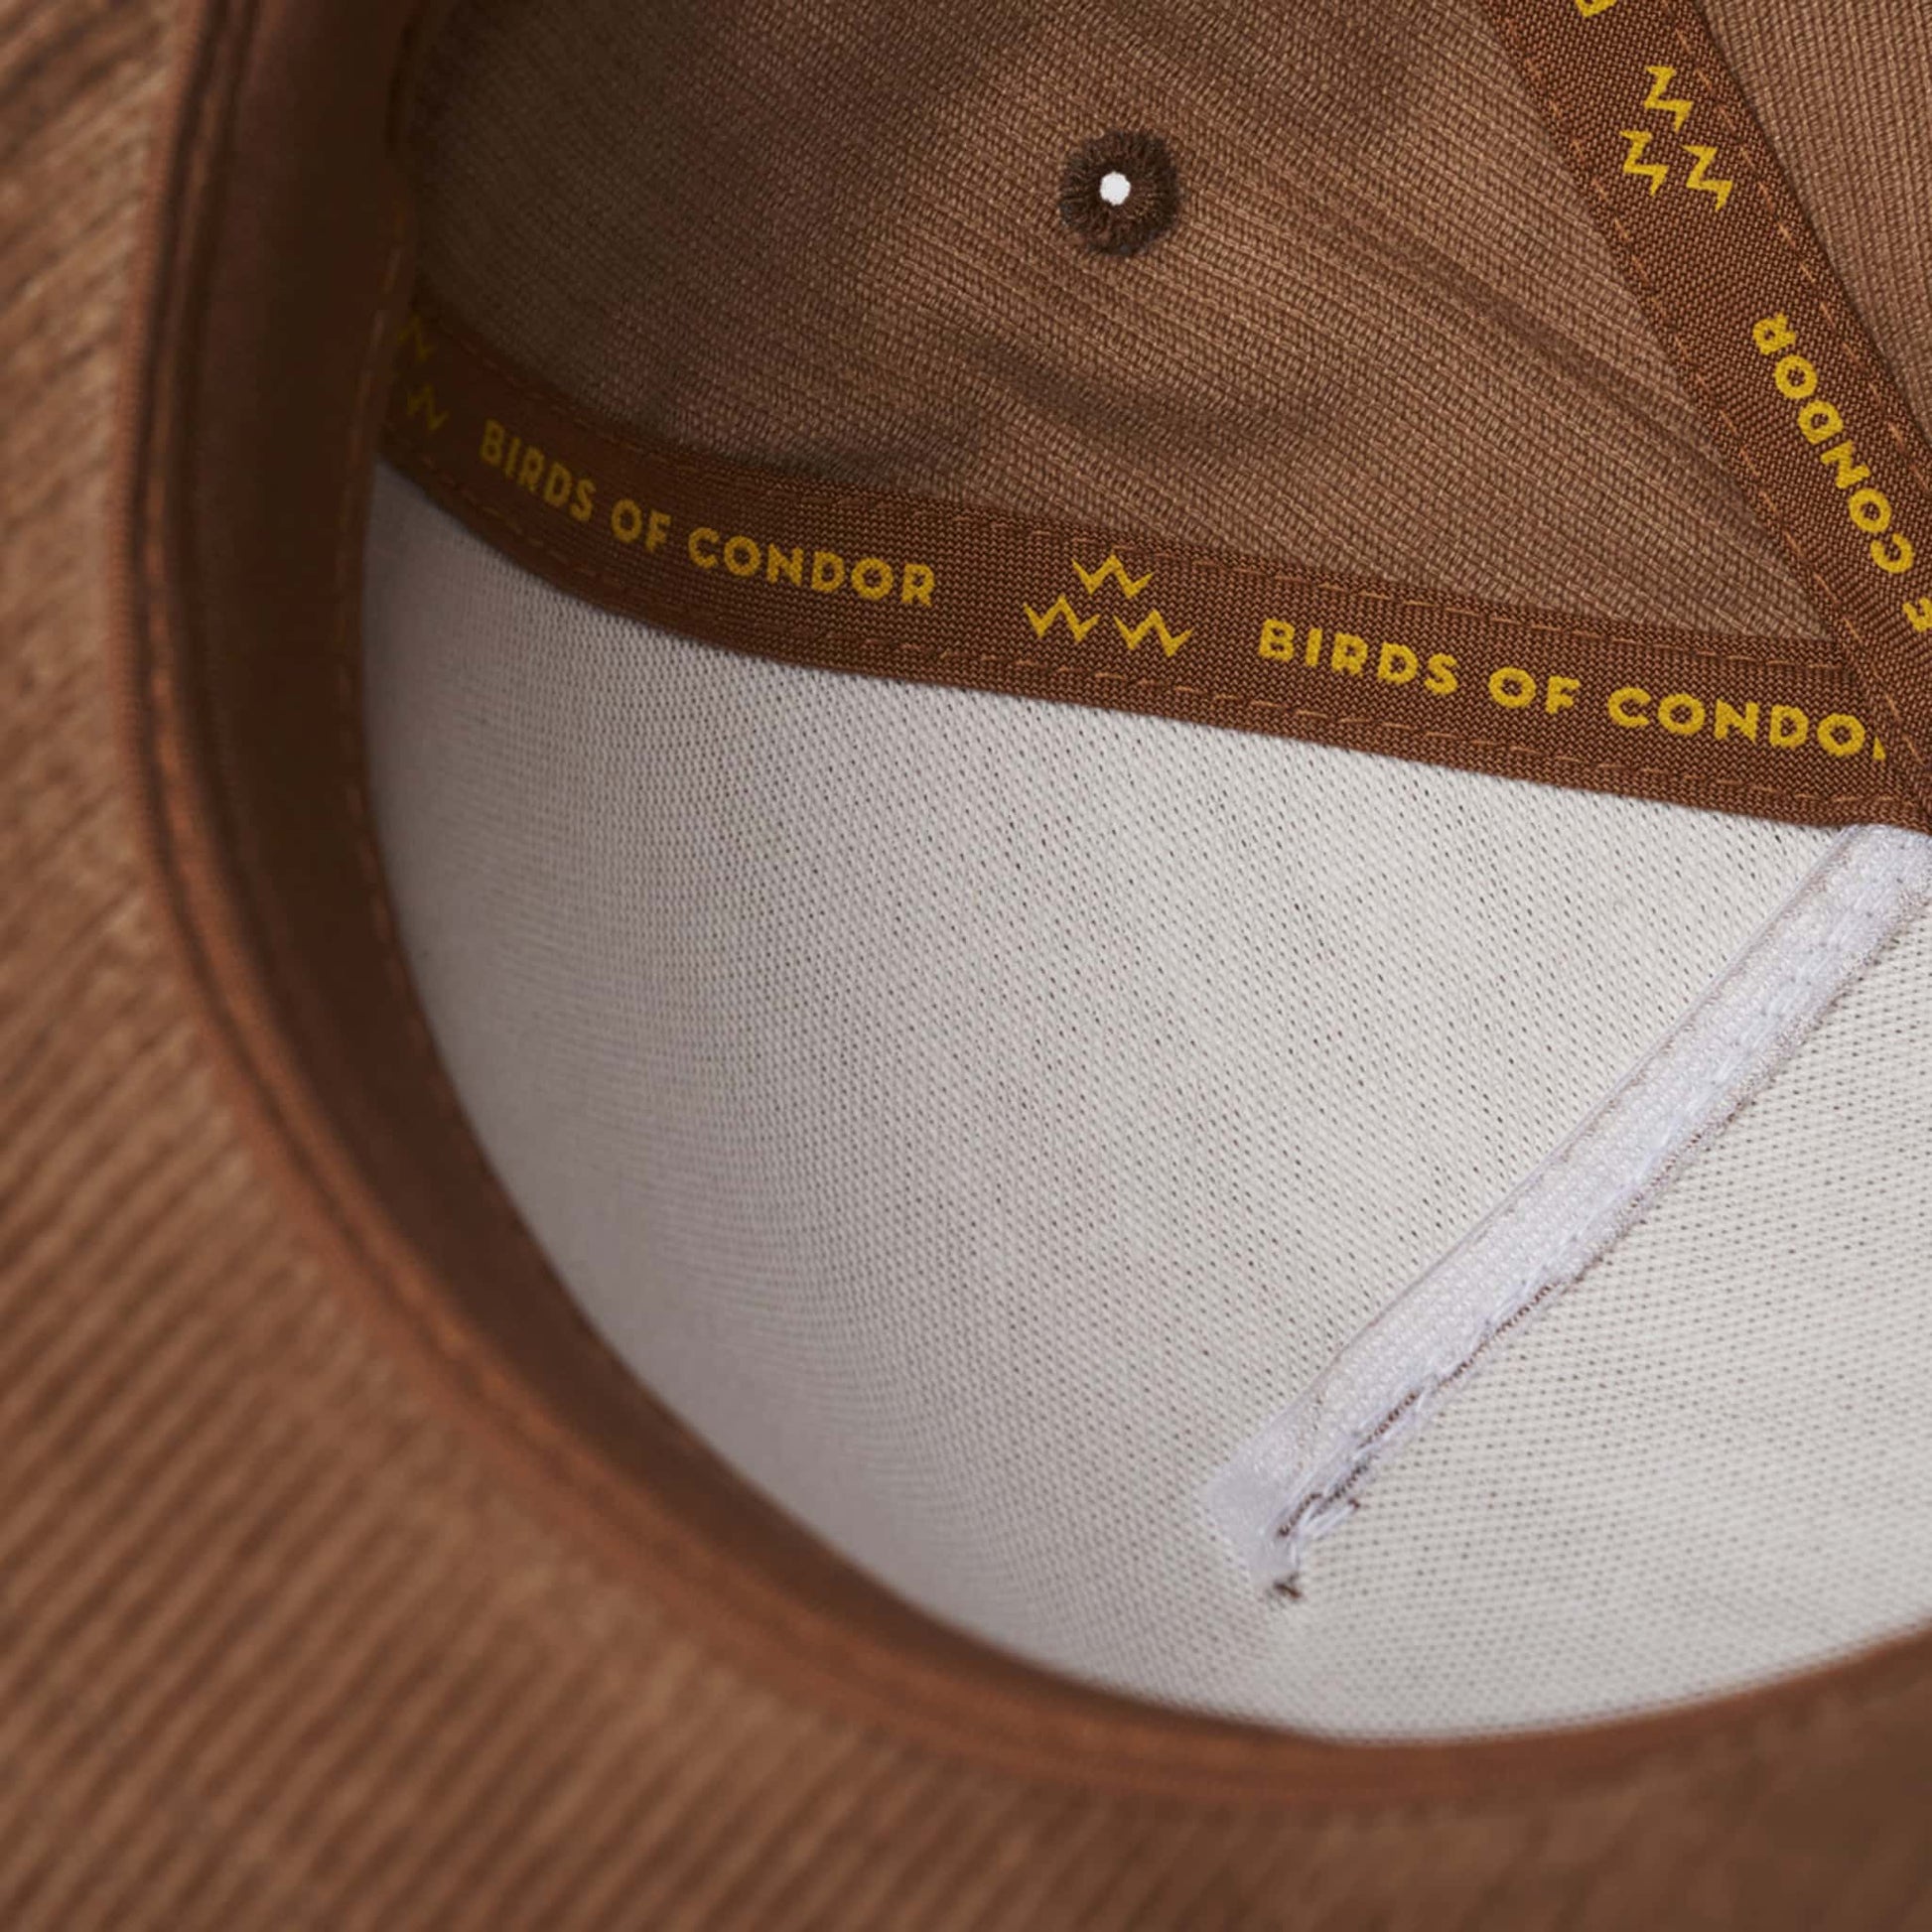 Golden Bear Snapback Hat - Brown Corduroy, Plastic Snap, Slight Curve Brim, 100% Cotton 5 Panel, OSFA (Suitable for Larger Heads), Inside Detail View